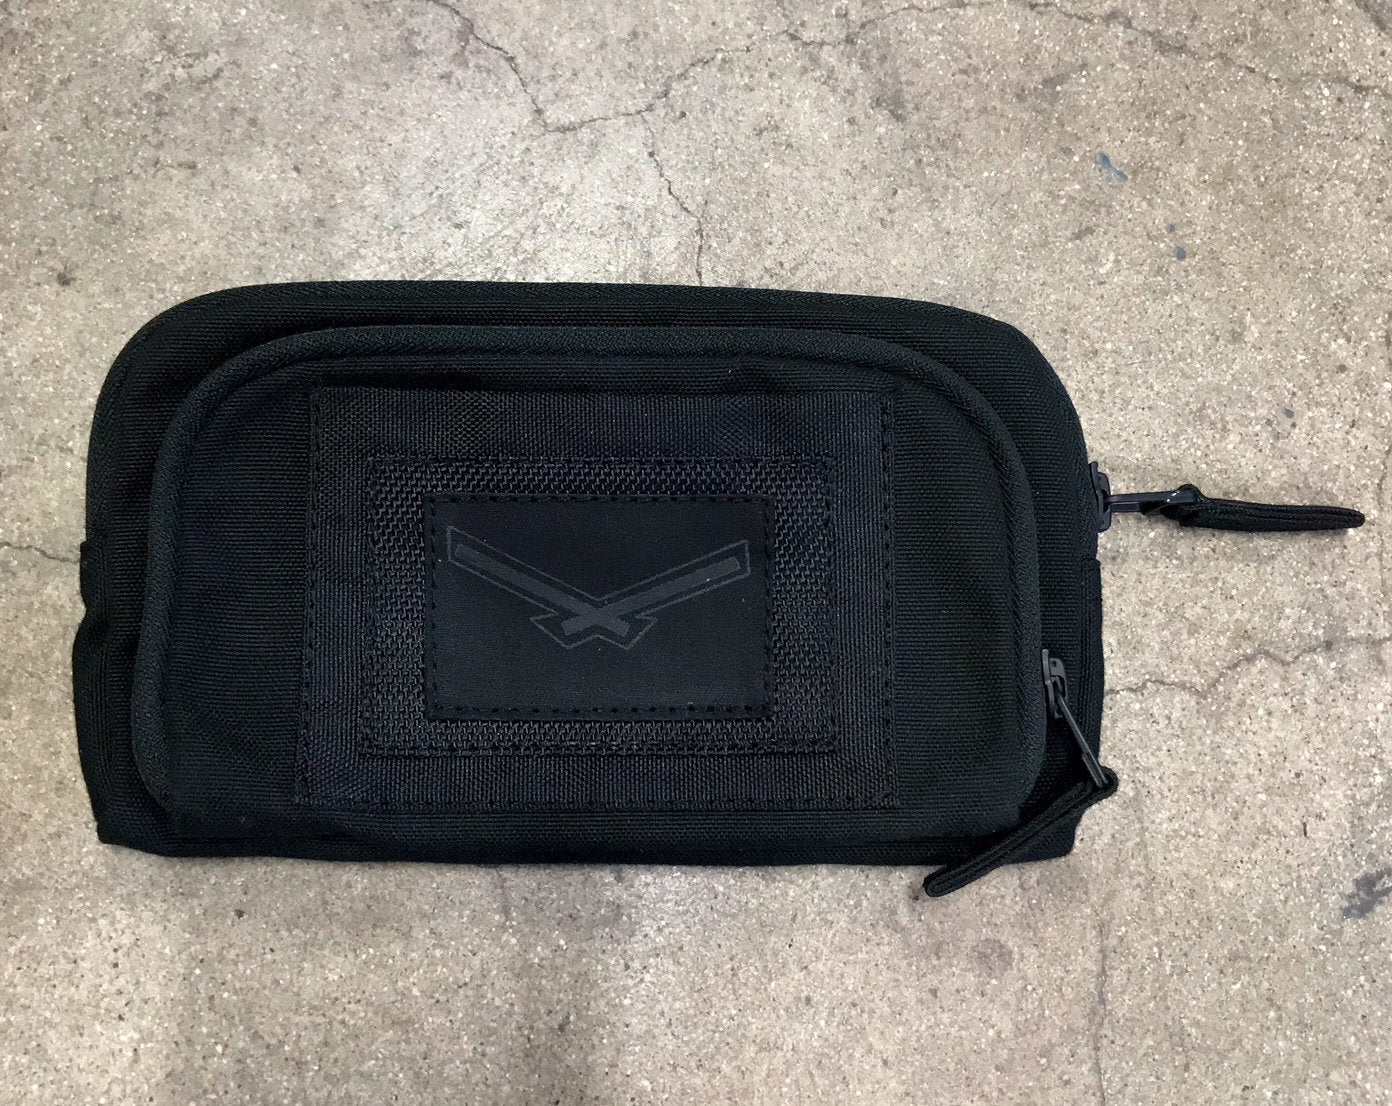 PITCH BLACK Backpack Canvas Unisex Crossbody Convertible Messenger Bag